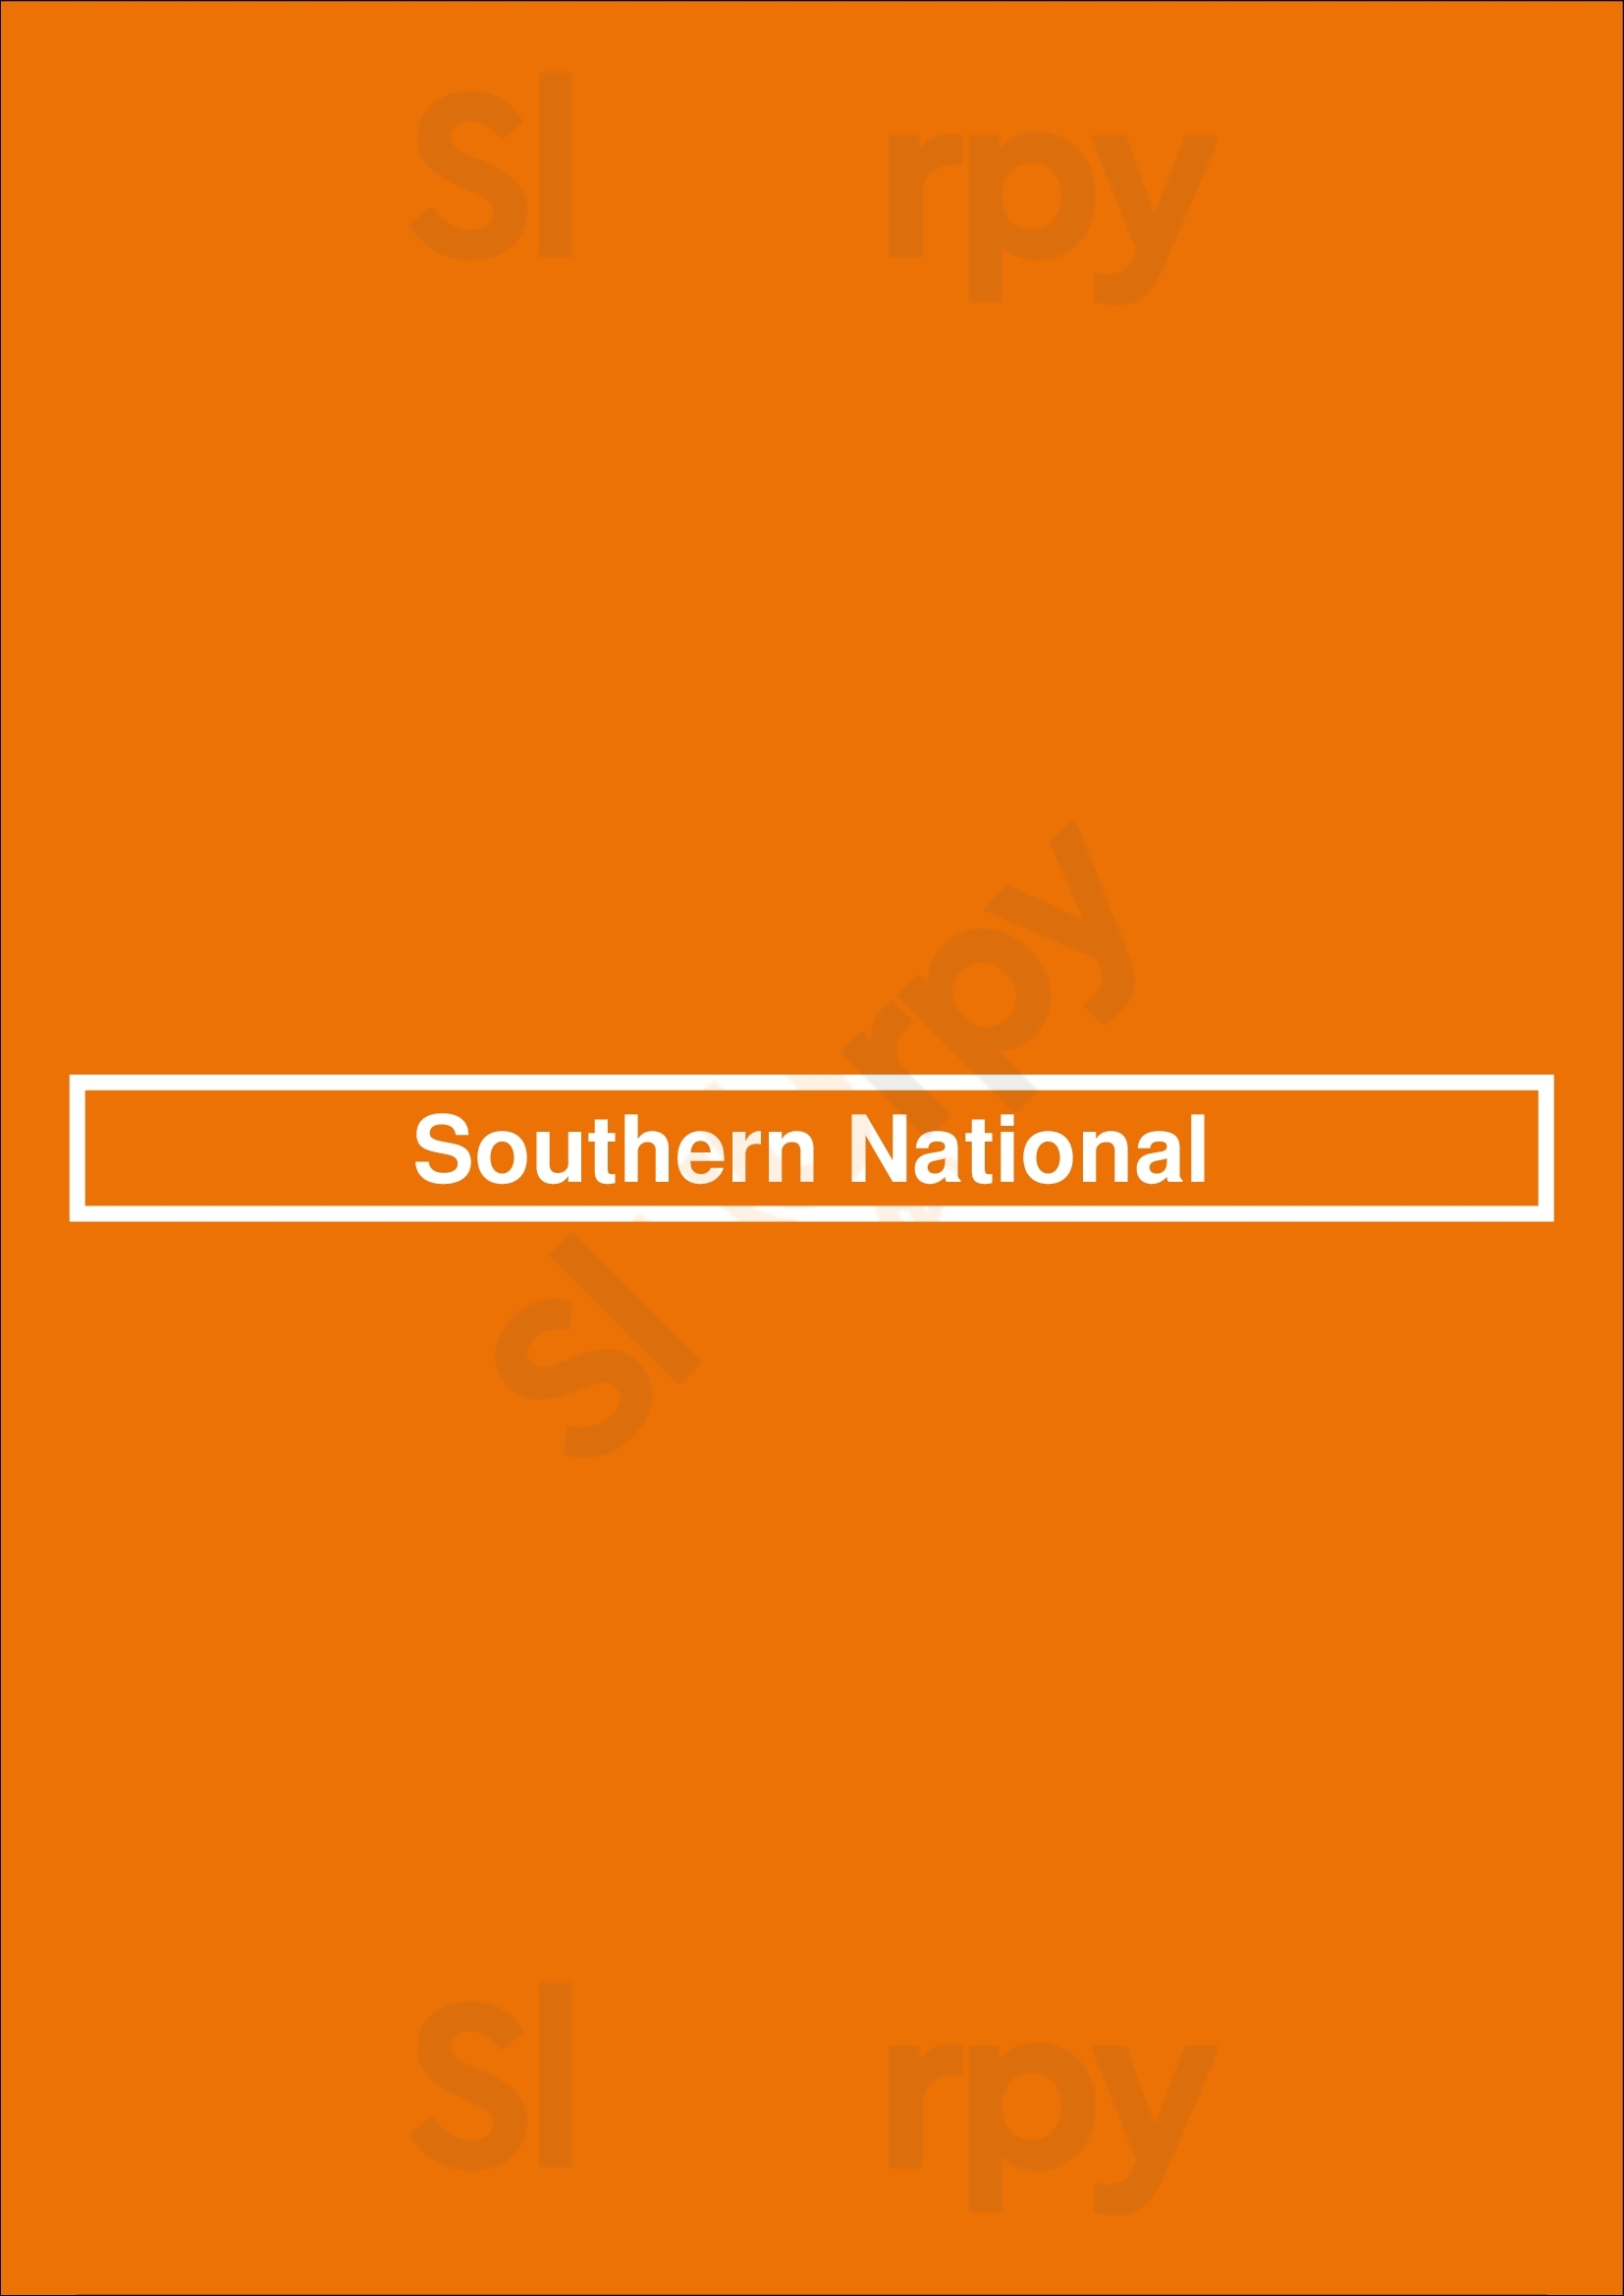 Southern National Mobile Menu - 1